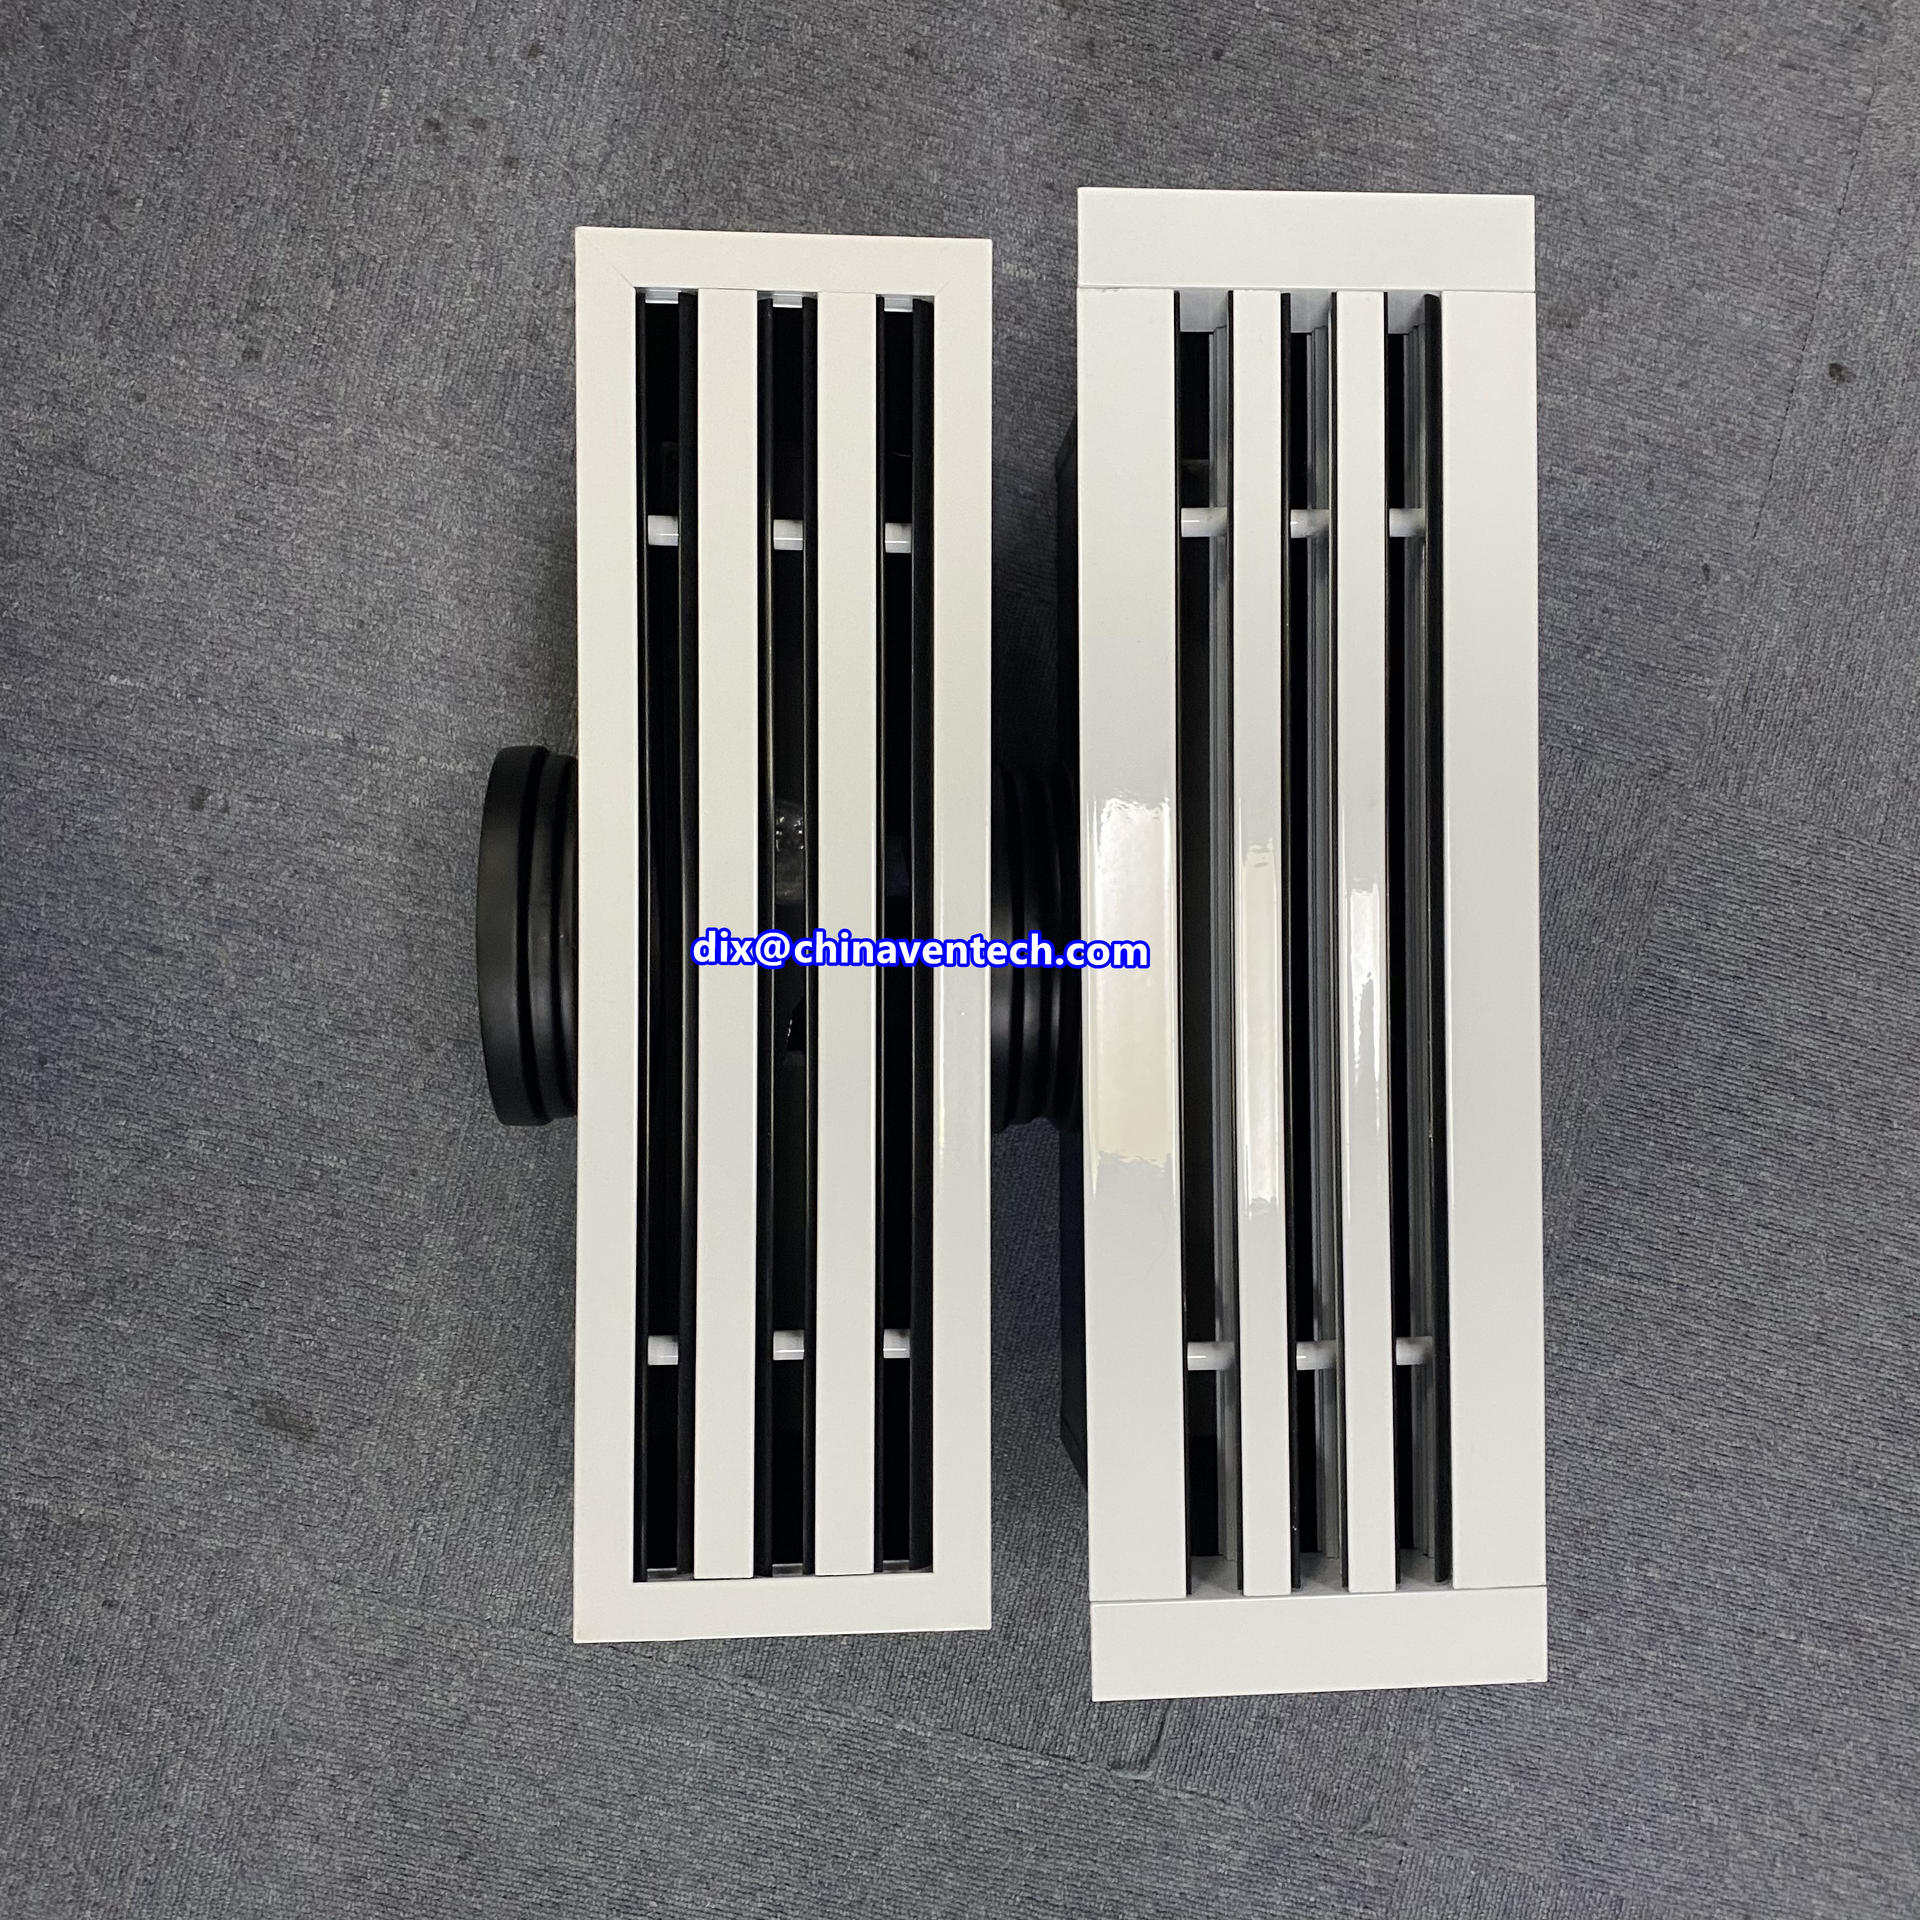 Ventech Hot sale aluminum ventilation linear slot diffuser for HVAC systems